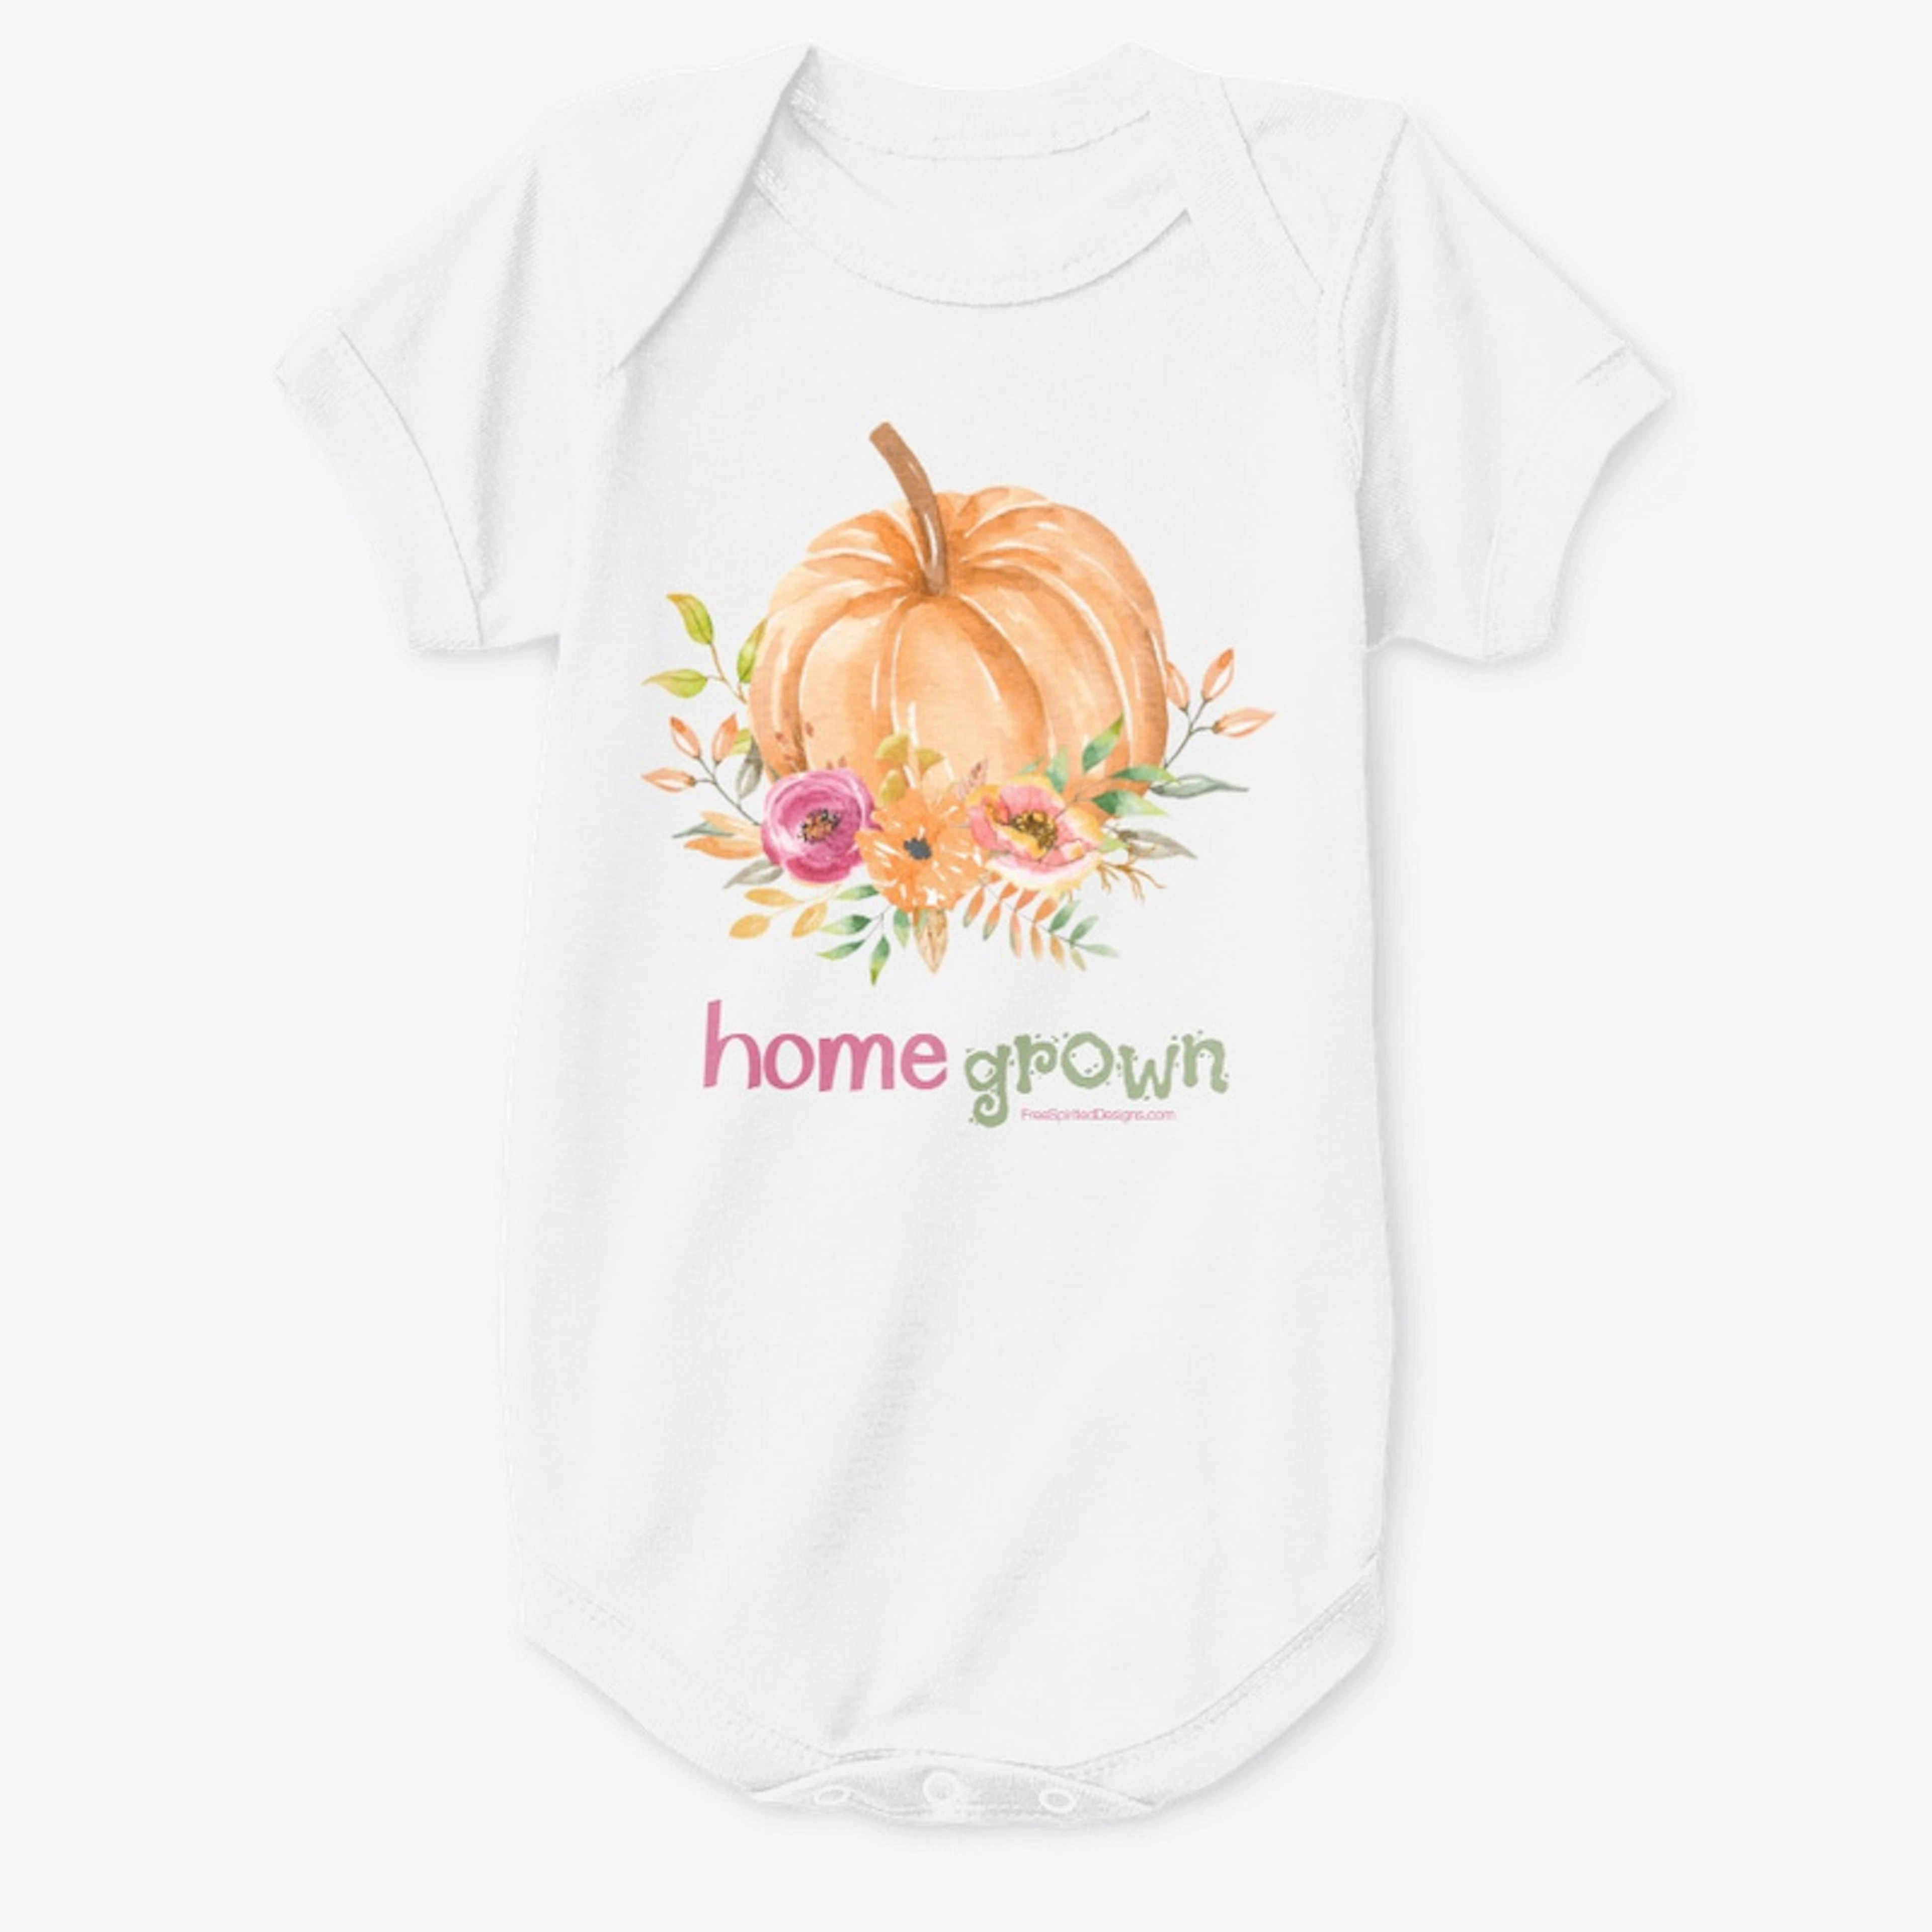 Home grown - Orange pumpkin